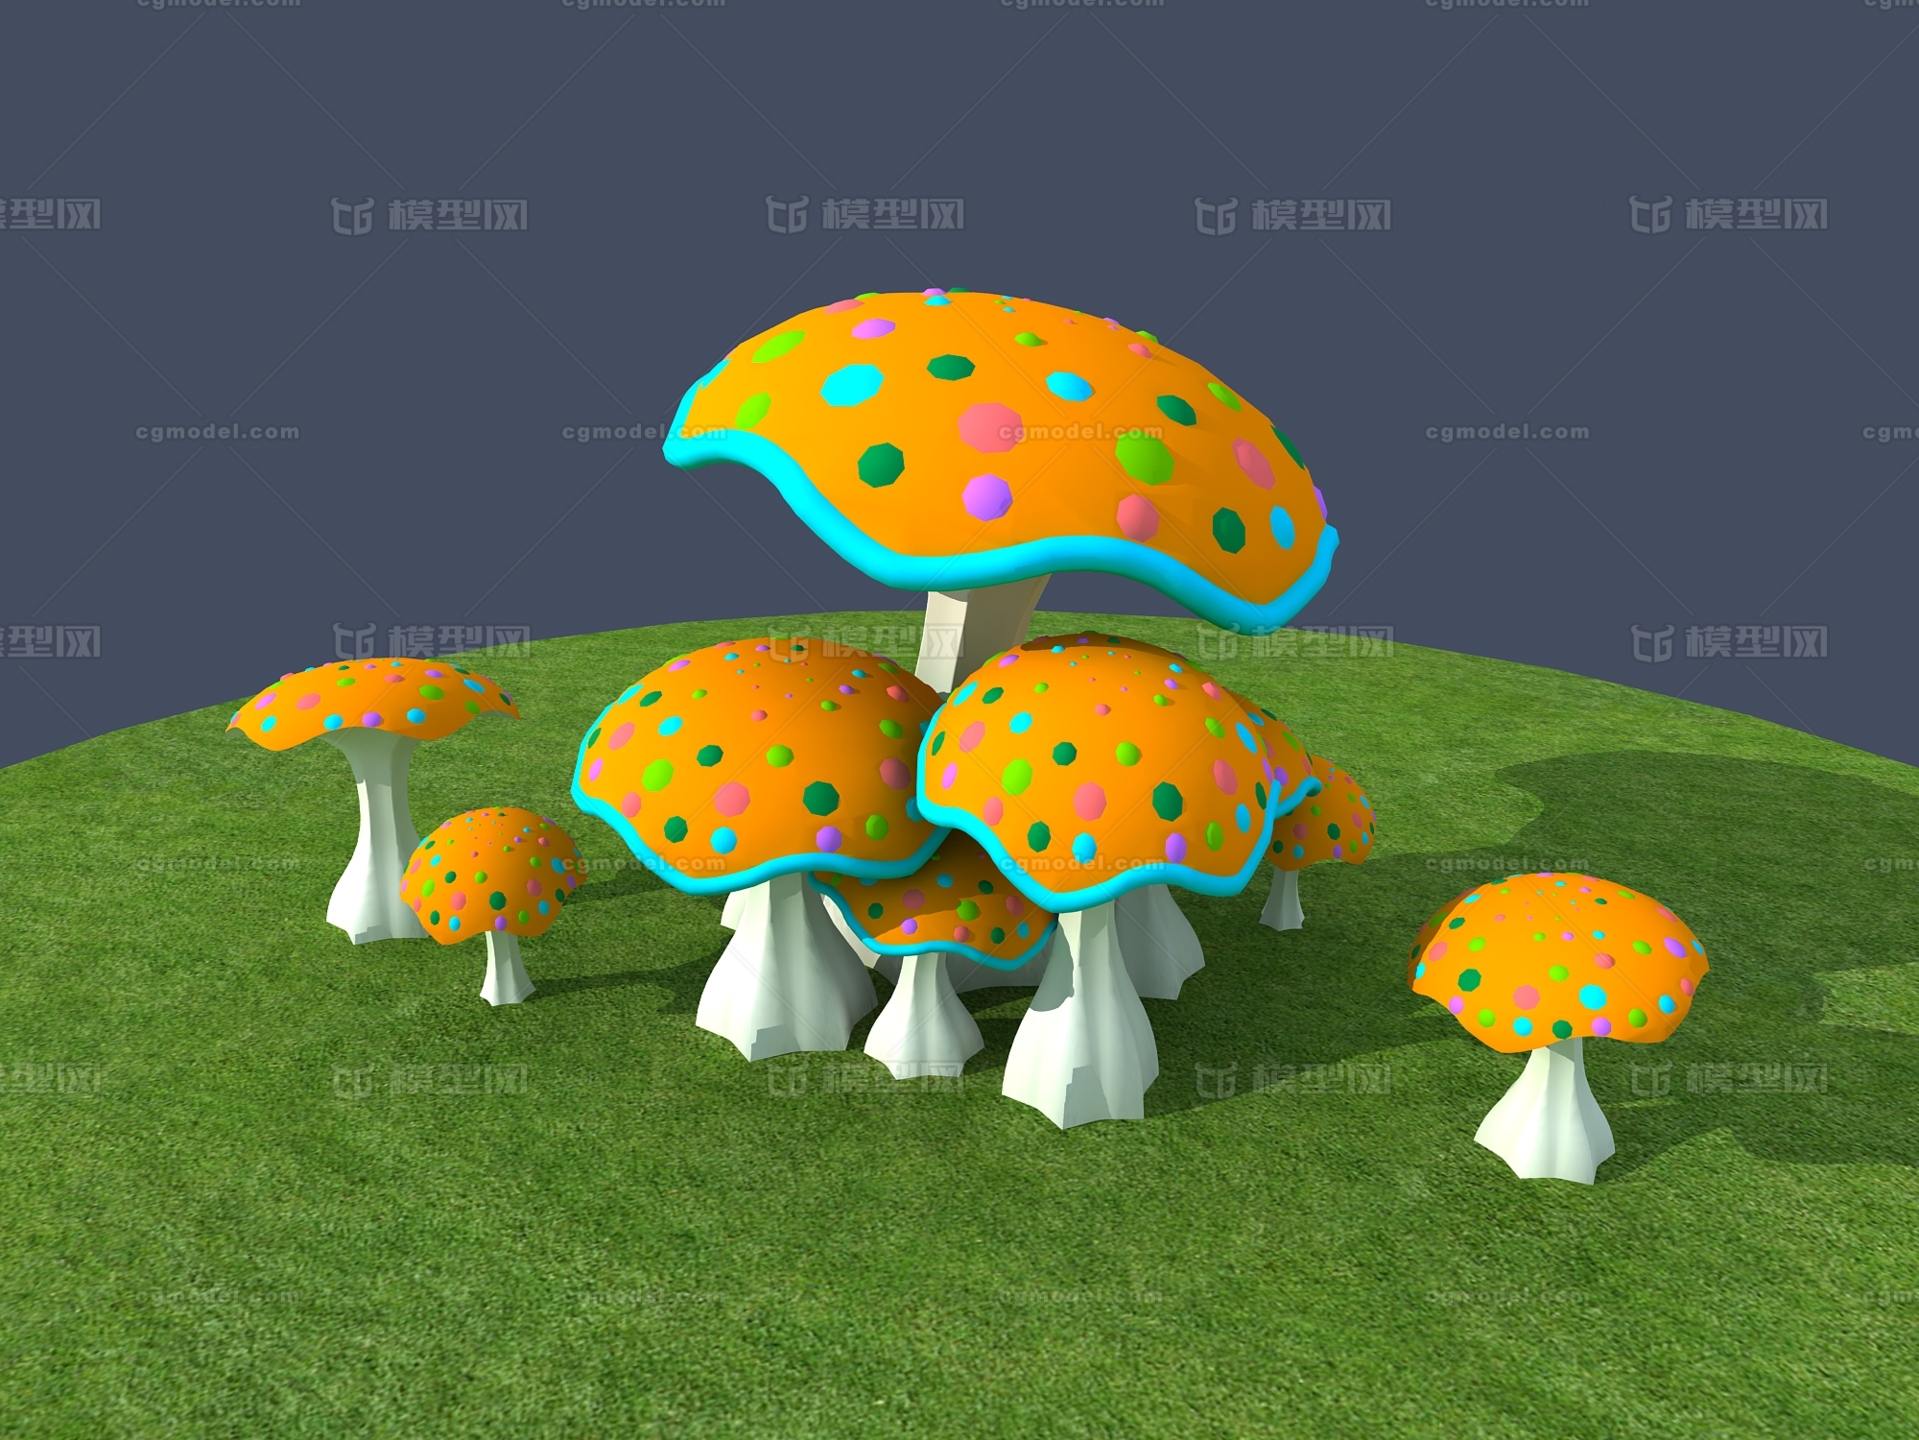 3D蘑菇素材设计图__其他_PSD分层素材_设计图库_昵图网nipic.com